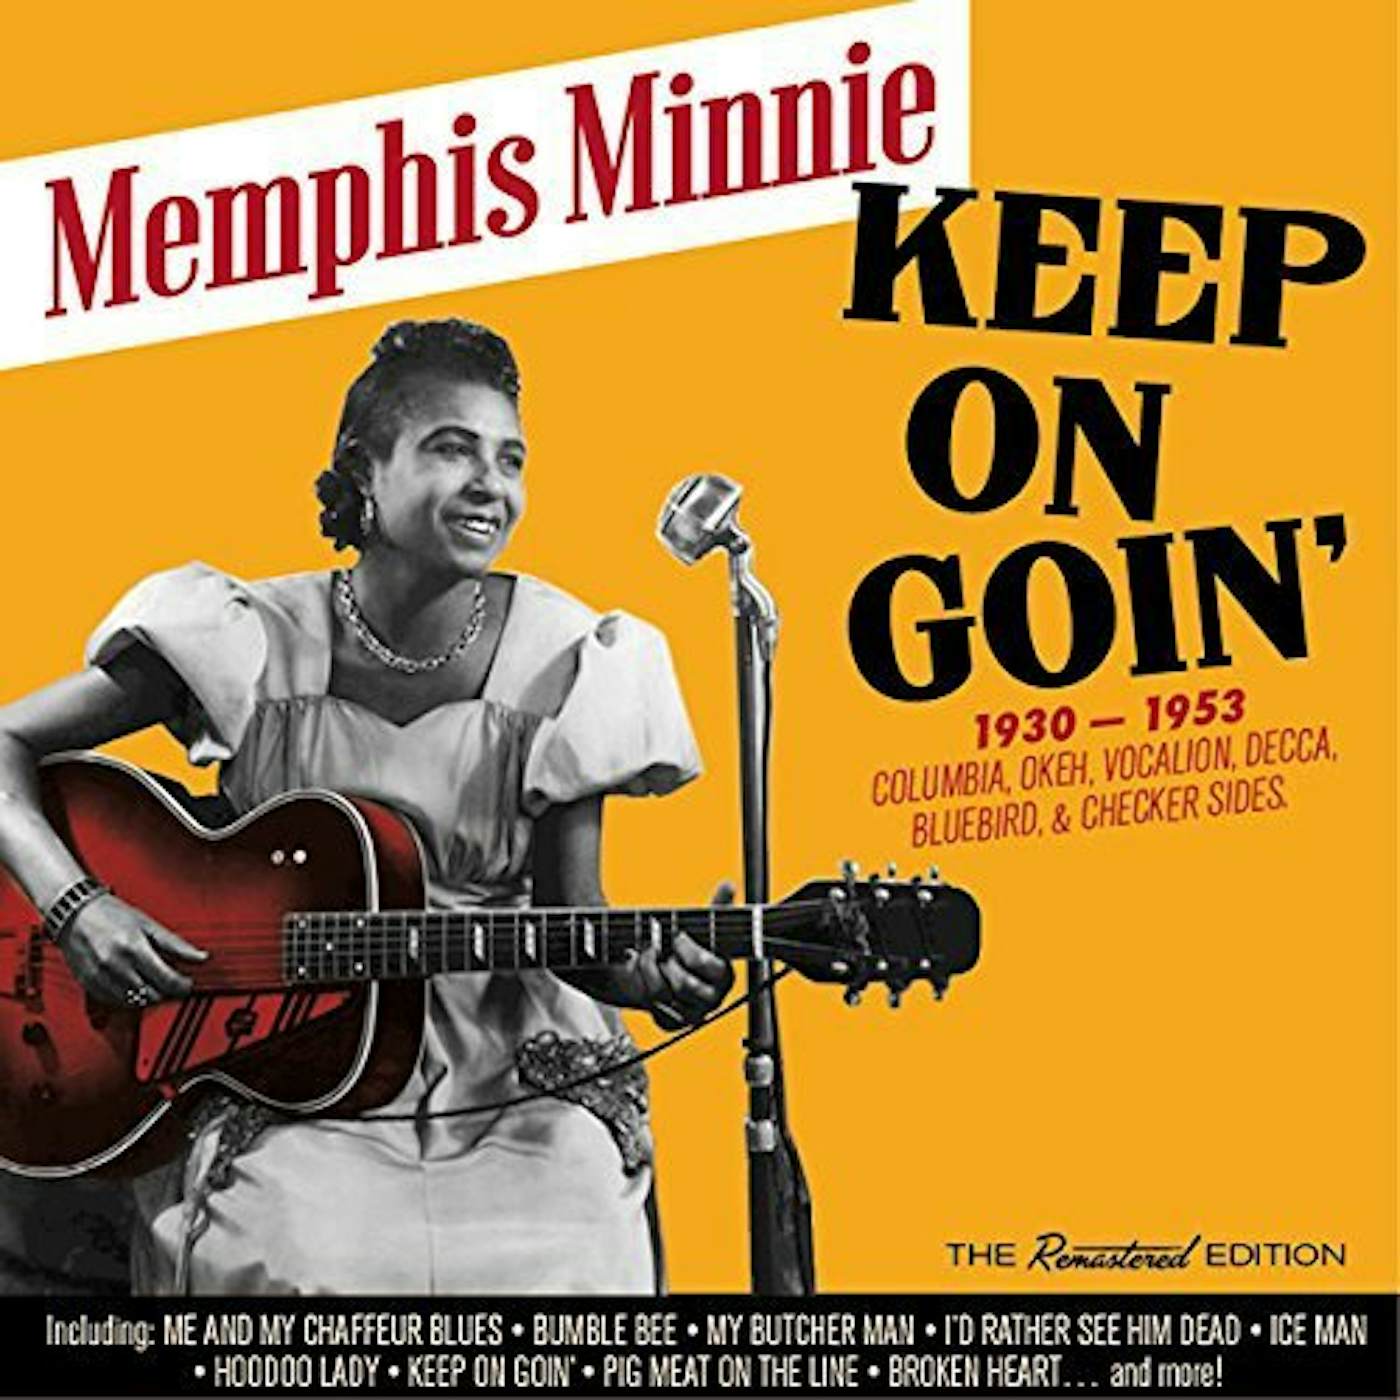 Memphis Minnie KEEP ON GOIN 1930 - 1953 CD